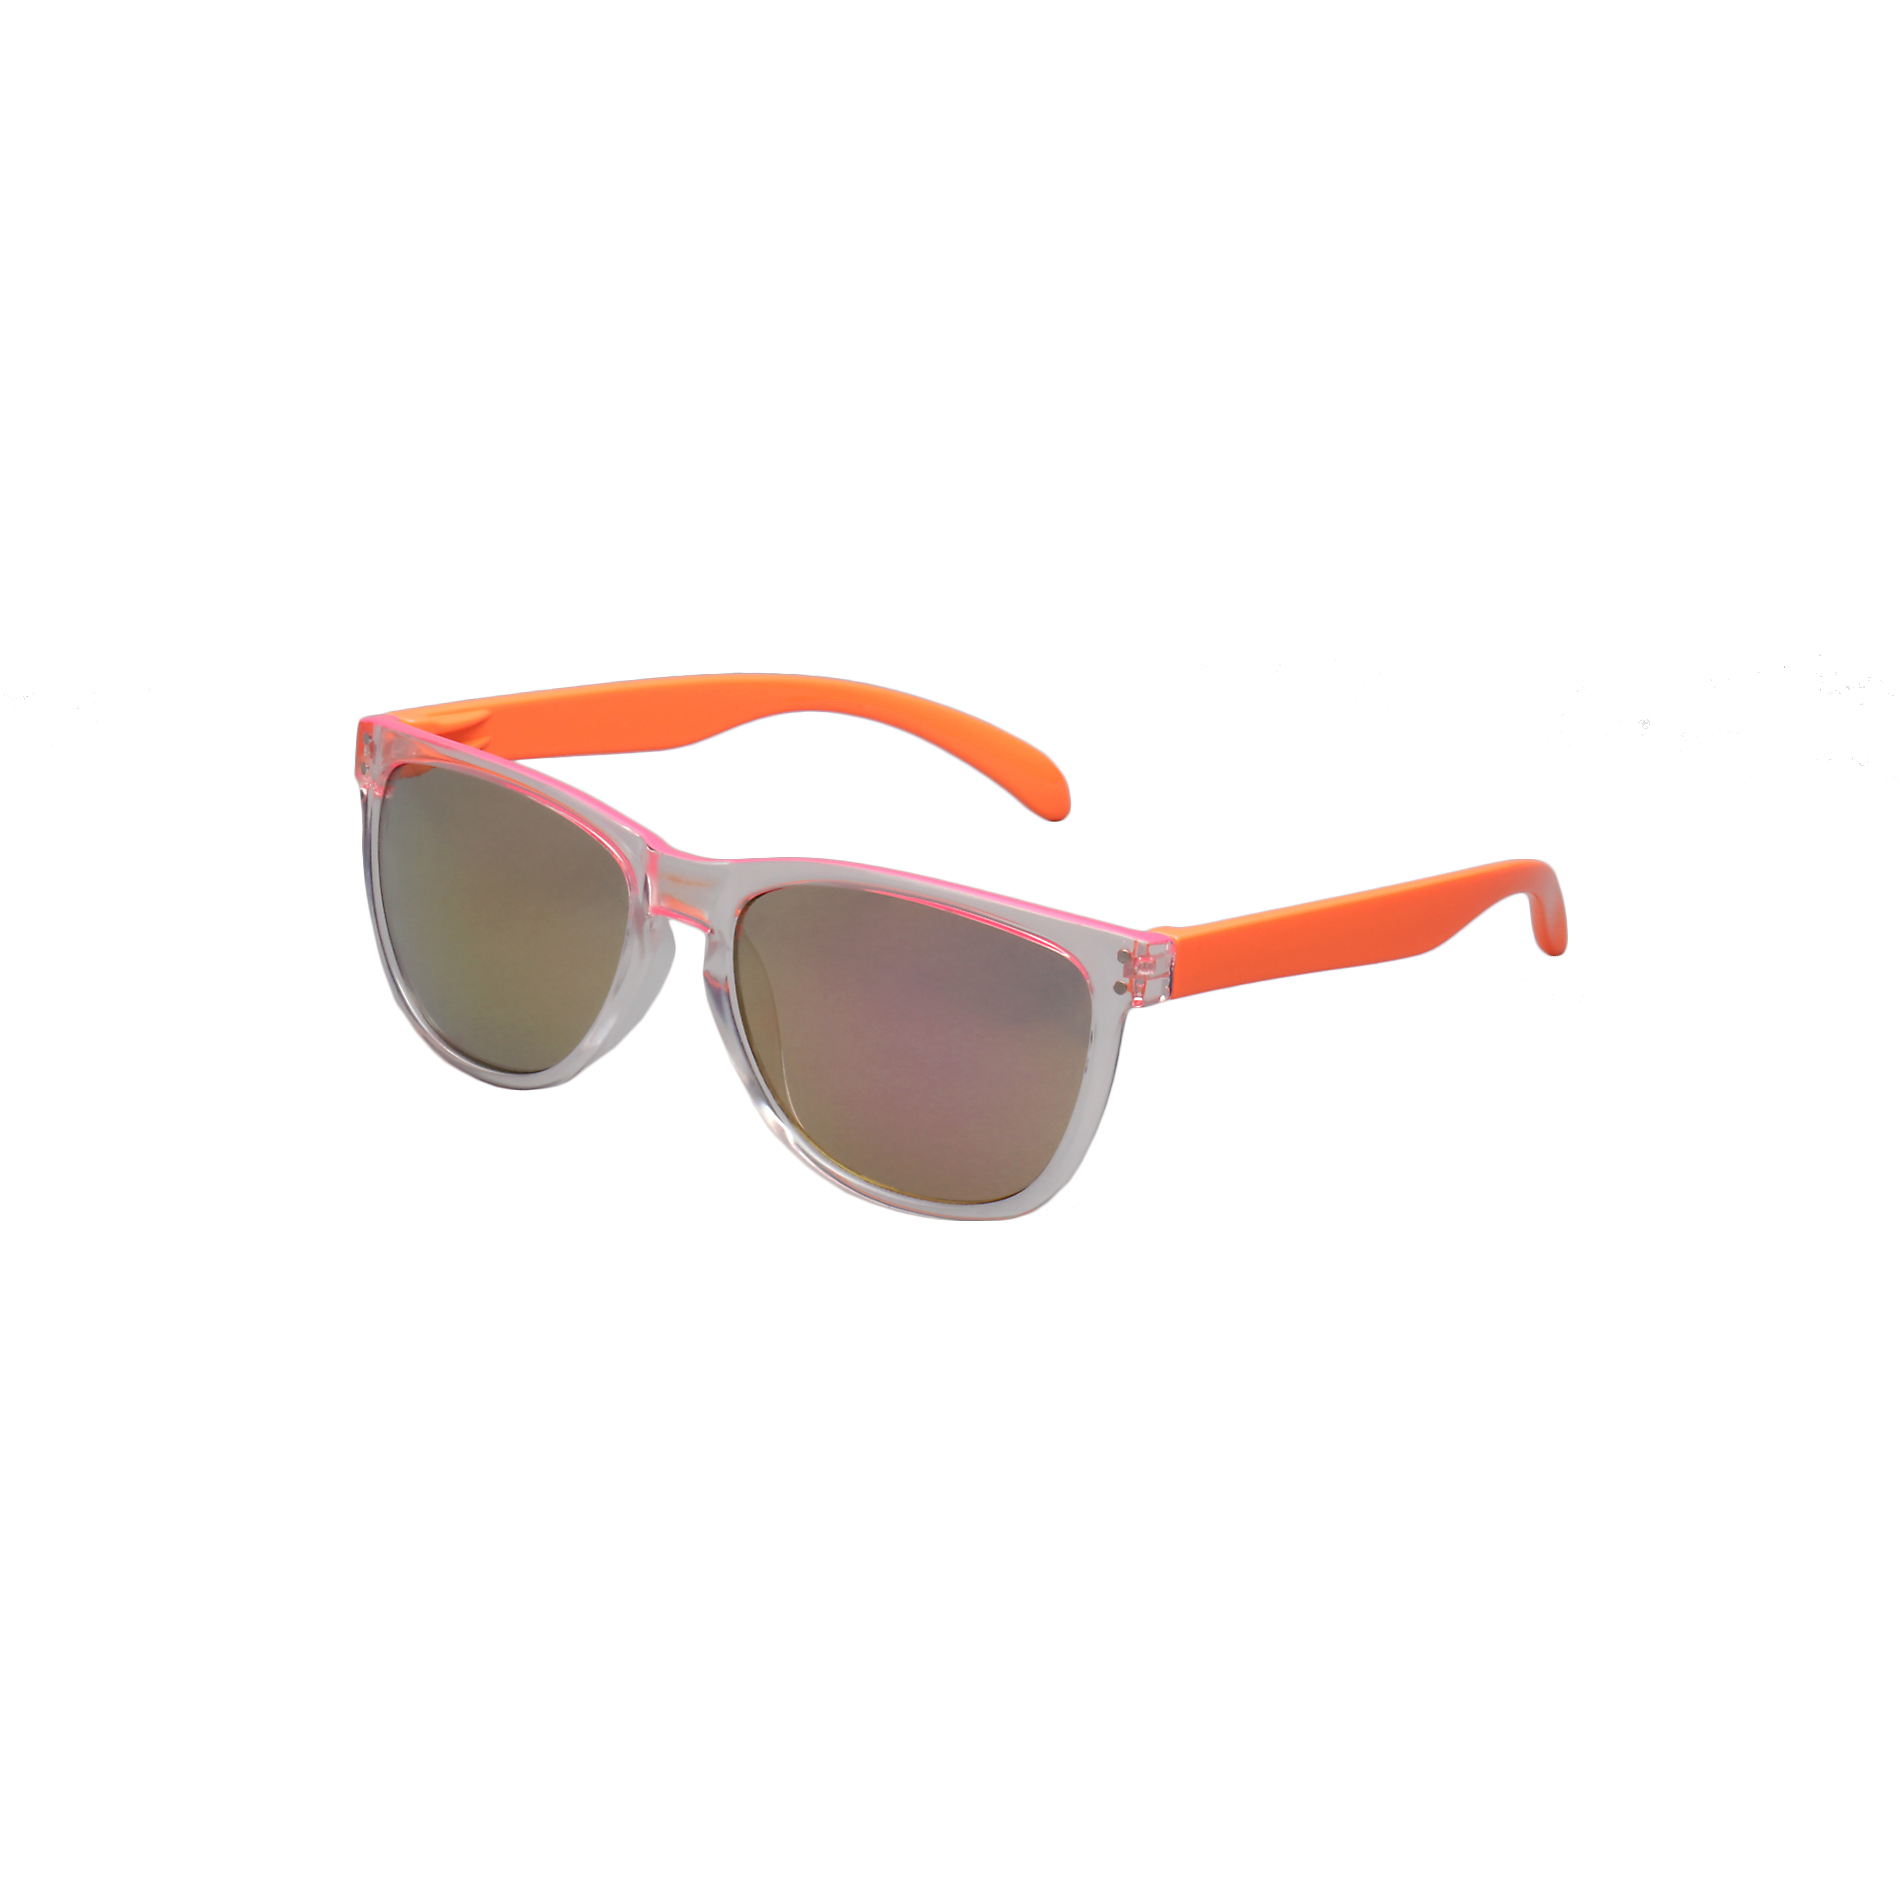 Joe Boxer Women's Neon Wayfarer Sunglasses